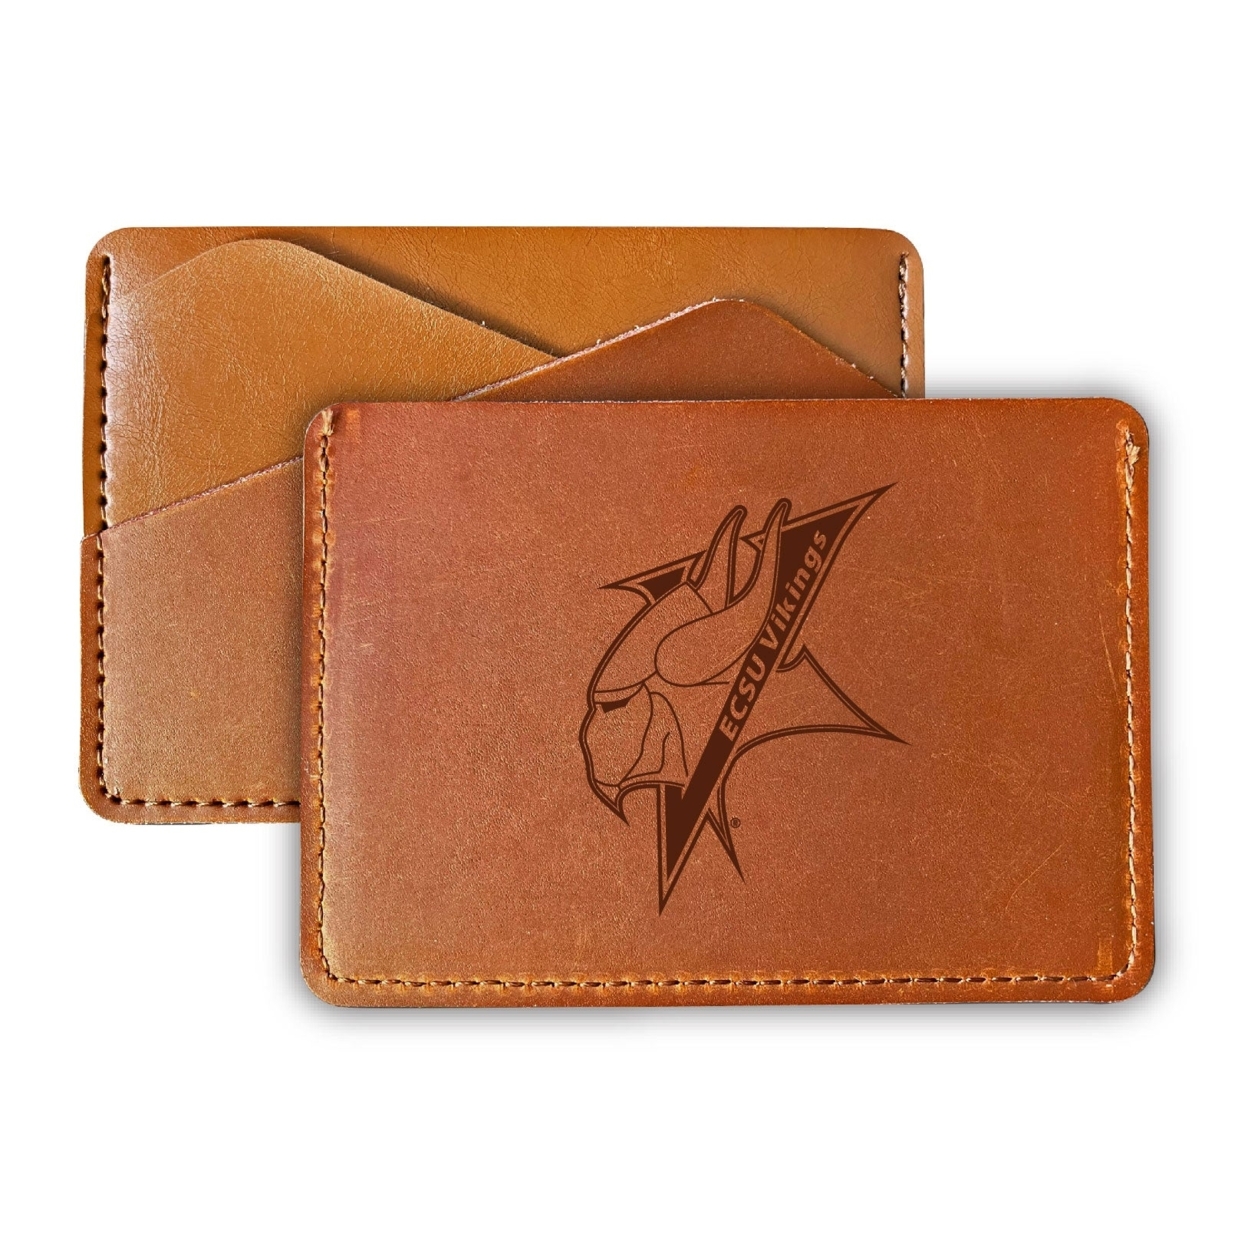 Elizabeth City State University College Leather Card Holder Wallet